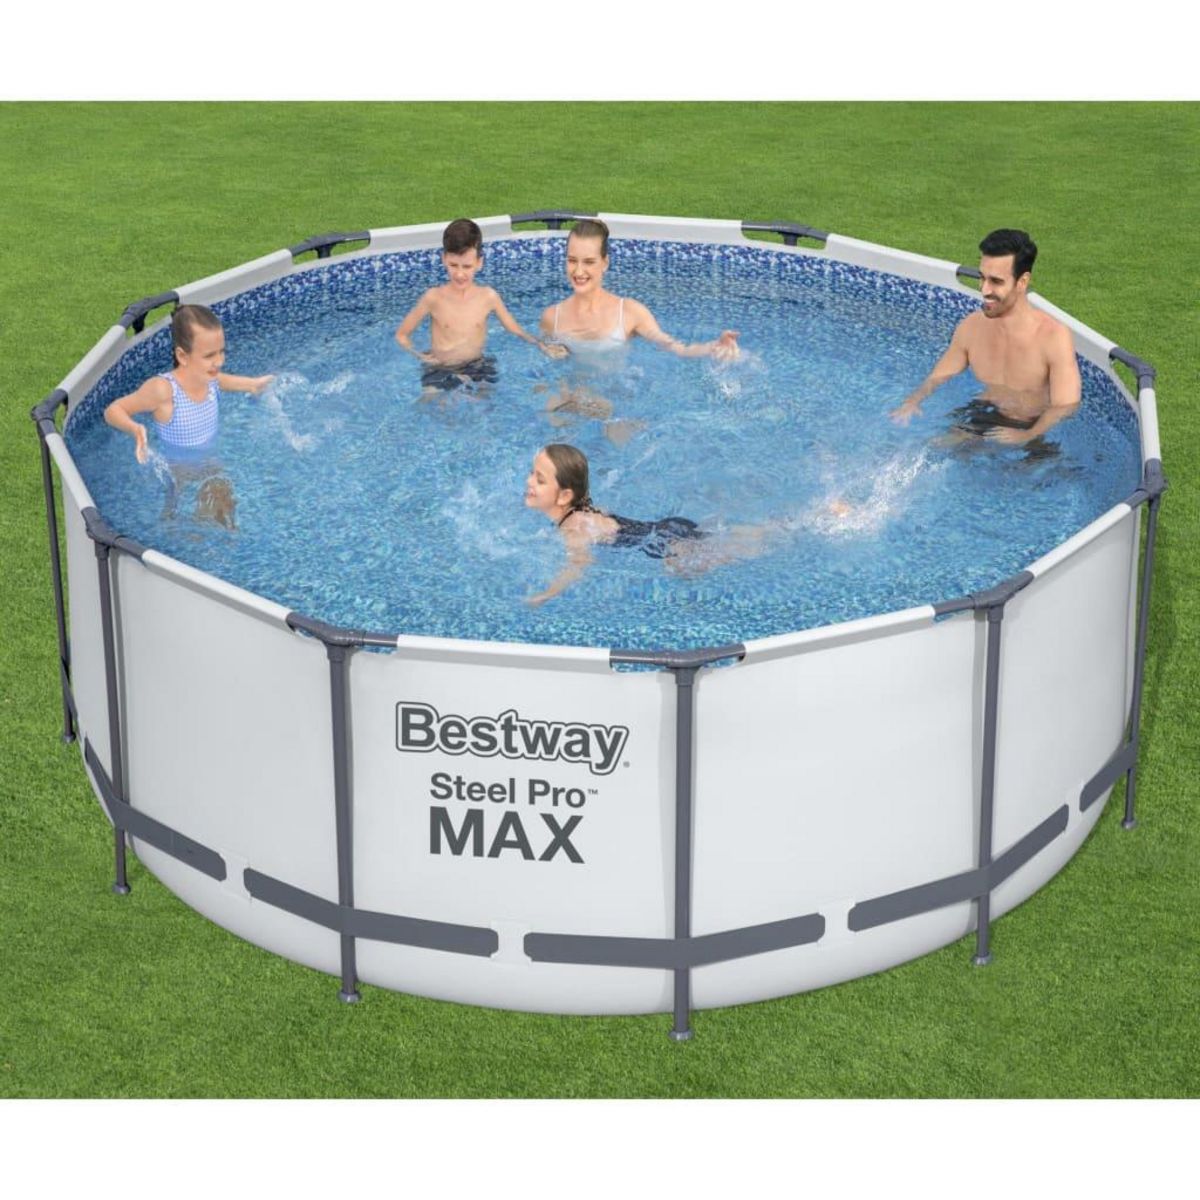 BESTWAY Bestway Ensemble de piscine Steel Pro MAX Rond 366x122 cm